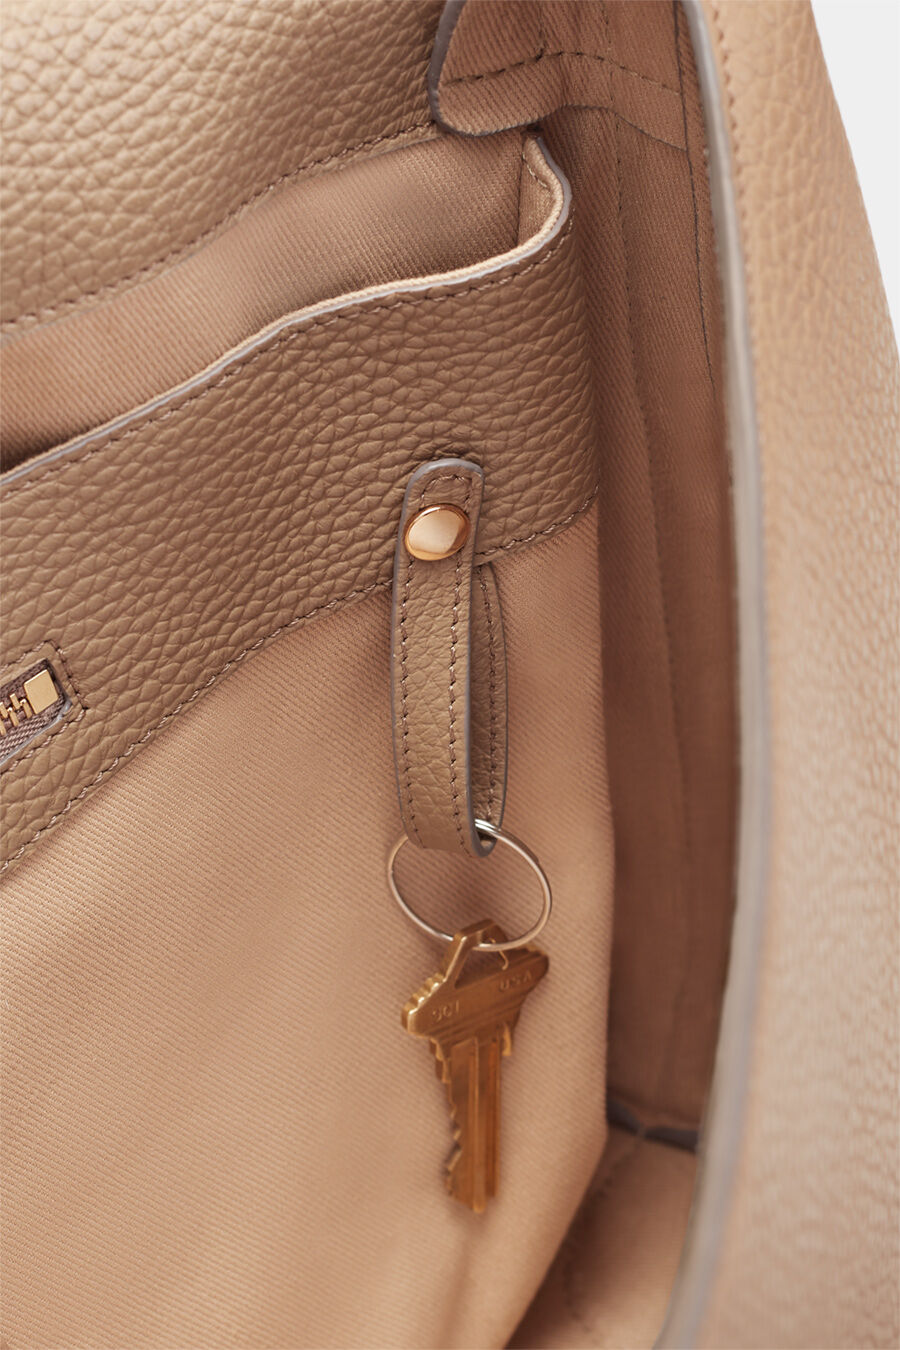 Close-up of a key hanging on a hook inside a bag